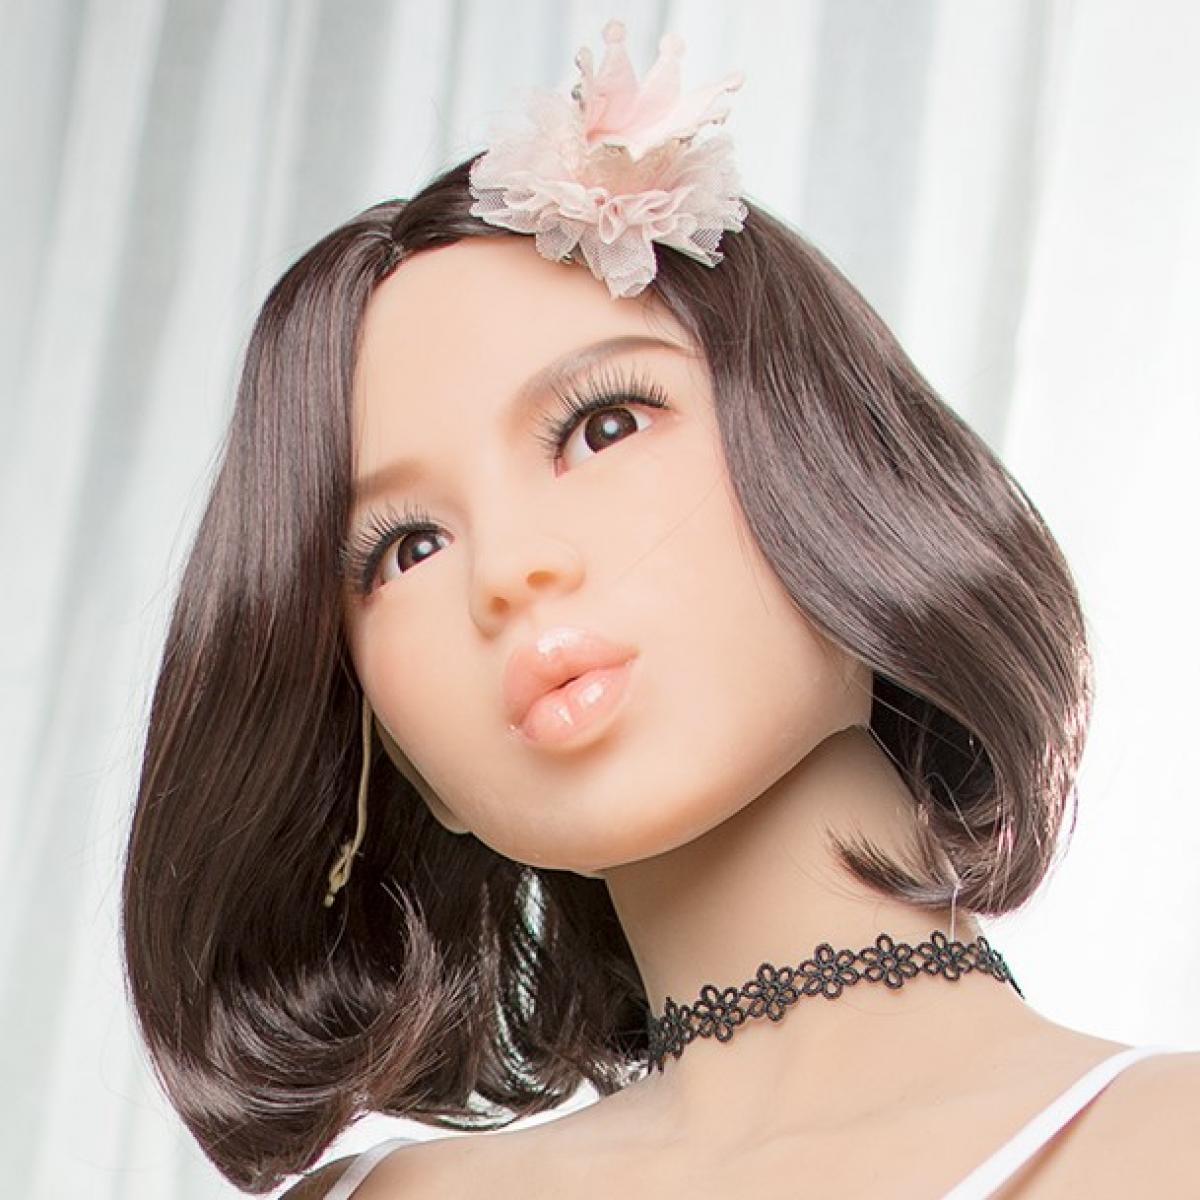 Neodoll Allure - Sex Doll Body Part - Tan - 151cm